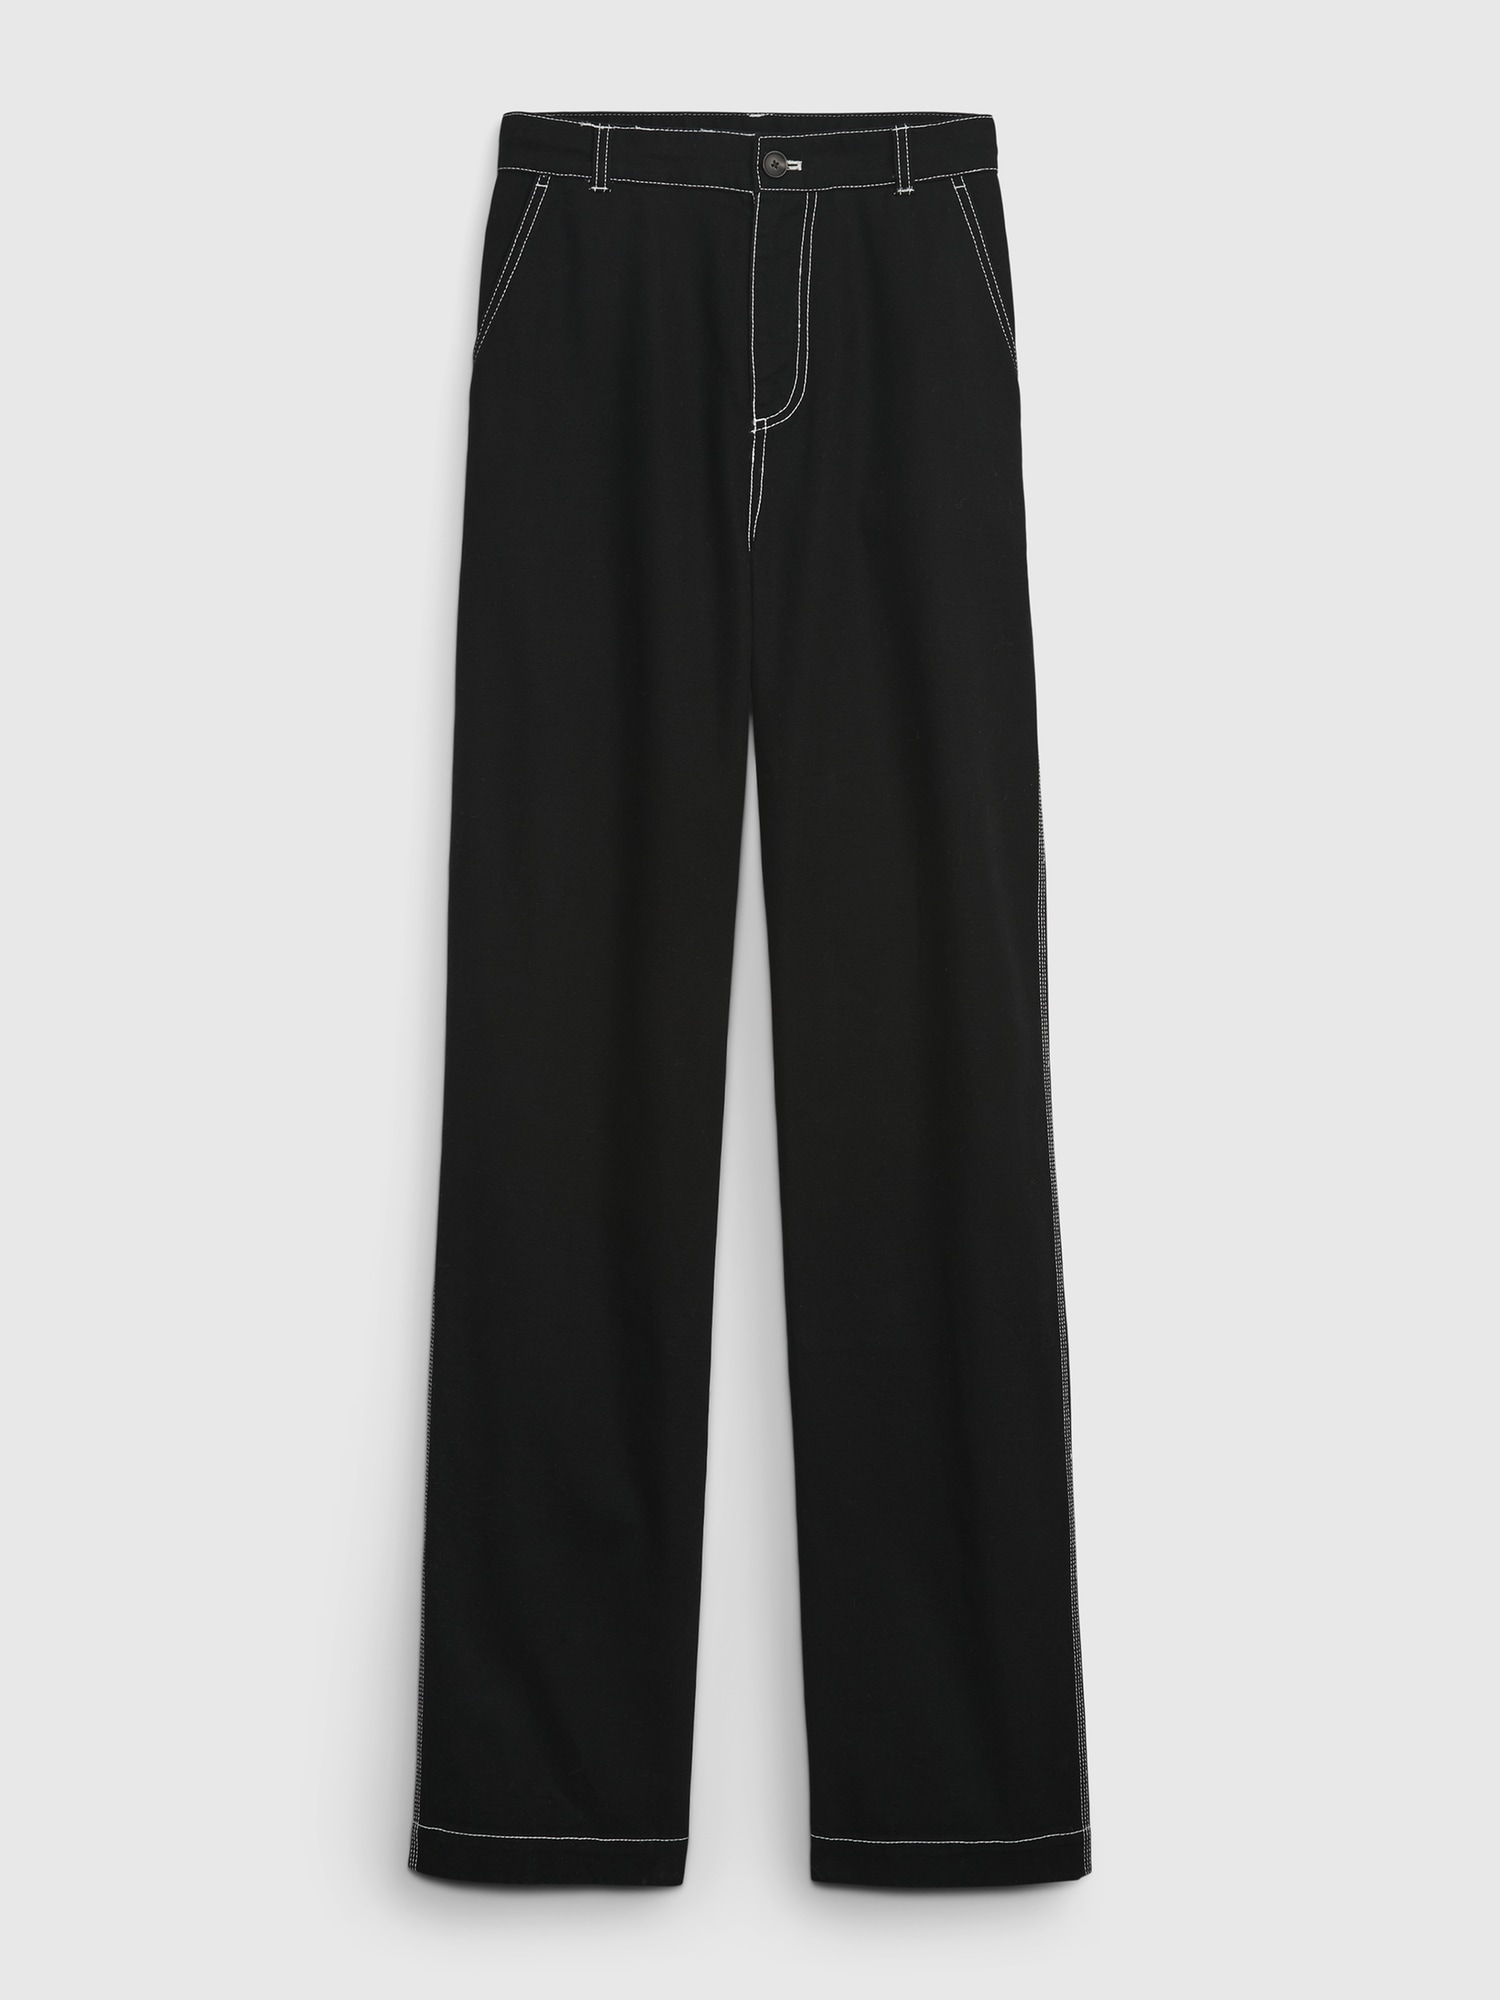 Gap Women's Black Capri Pants with Side Slits size 1